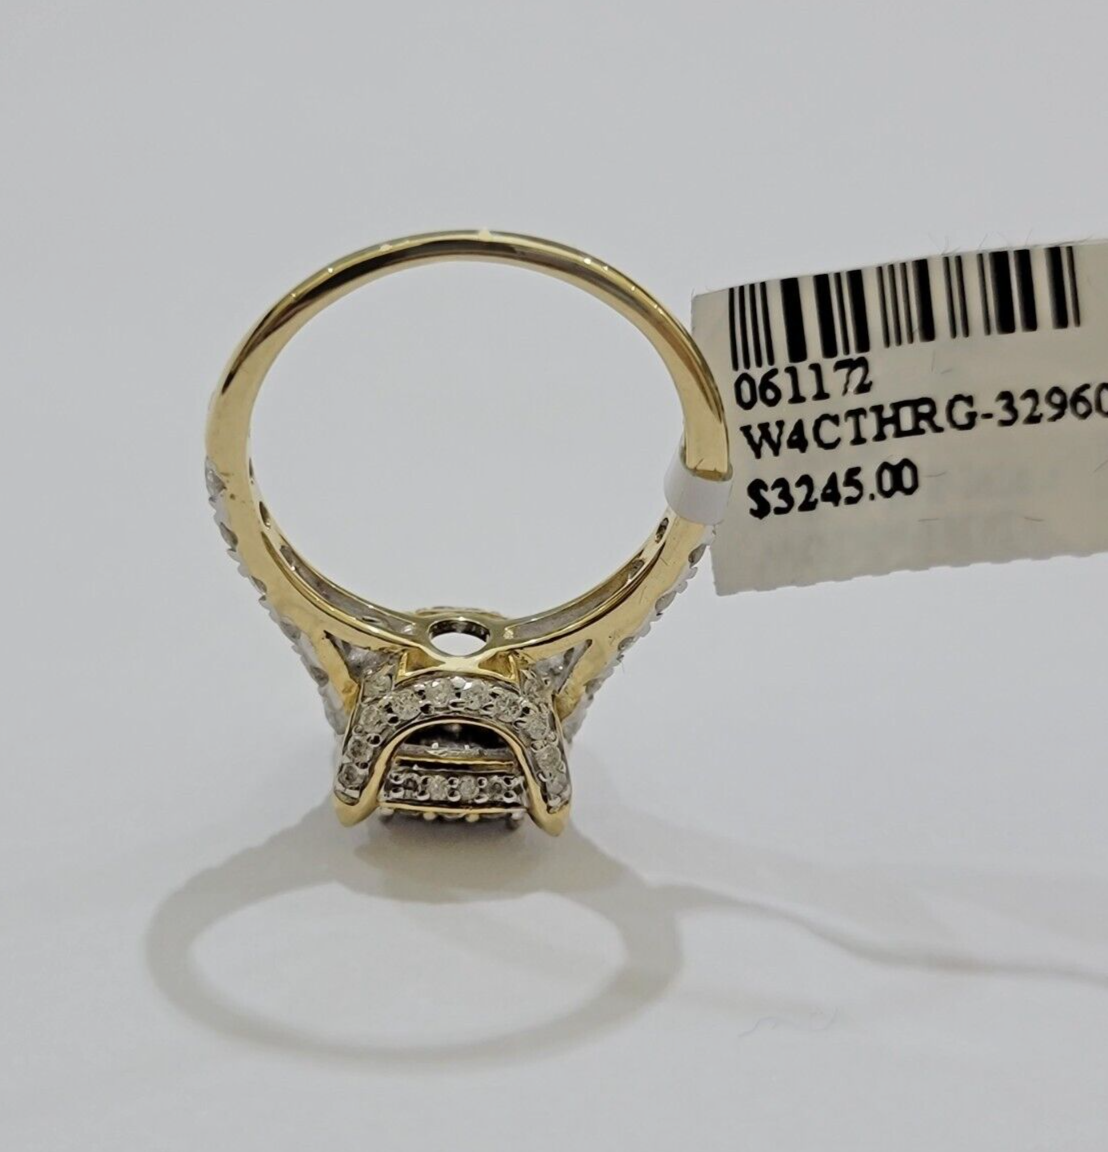 Real 10k Yellow Gold 1.35CT Diamond Ring Women Band Natural Genuine Wedding SALE